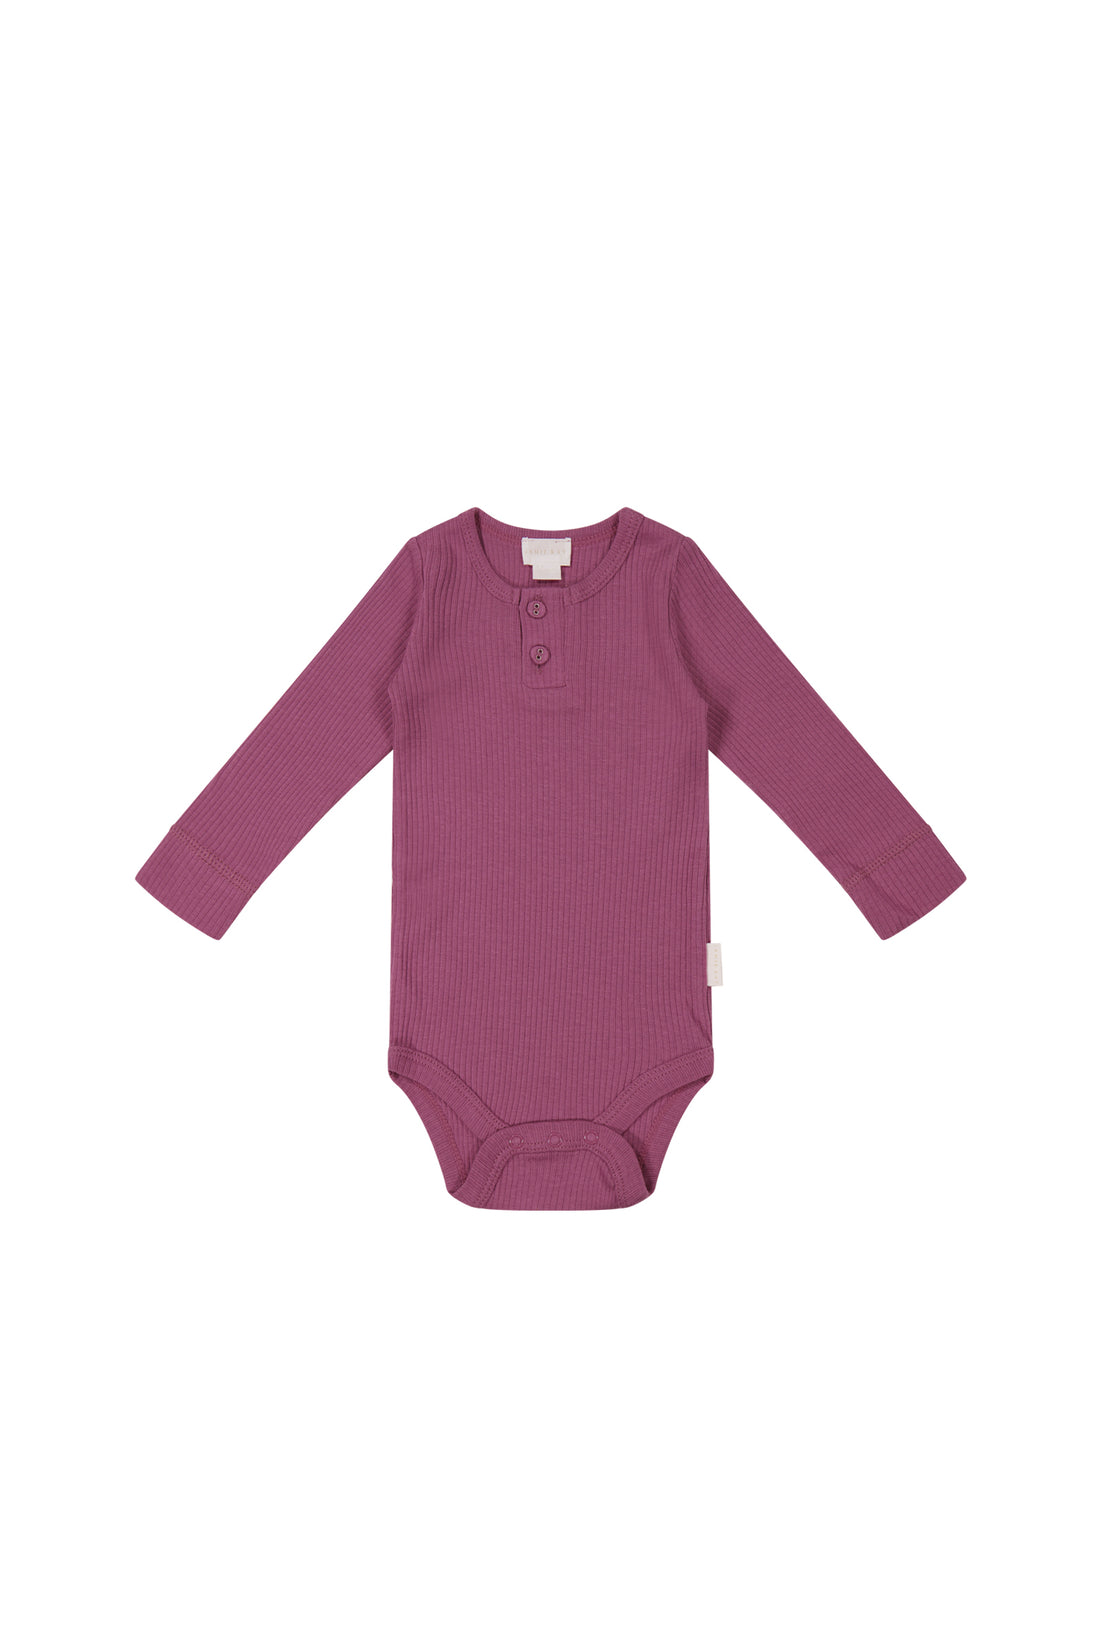 Organic Cotton Modal Long Sleeve Bodysuit - Cranberry Childrens Bodysuit from Jamie Kay NZ